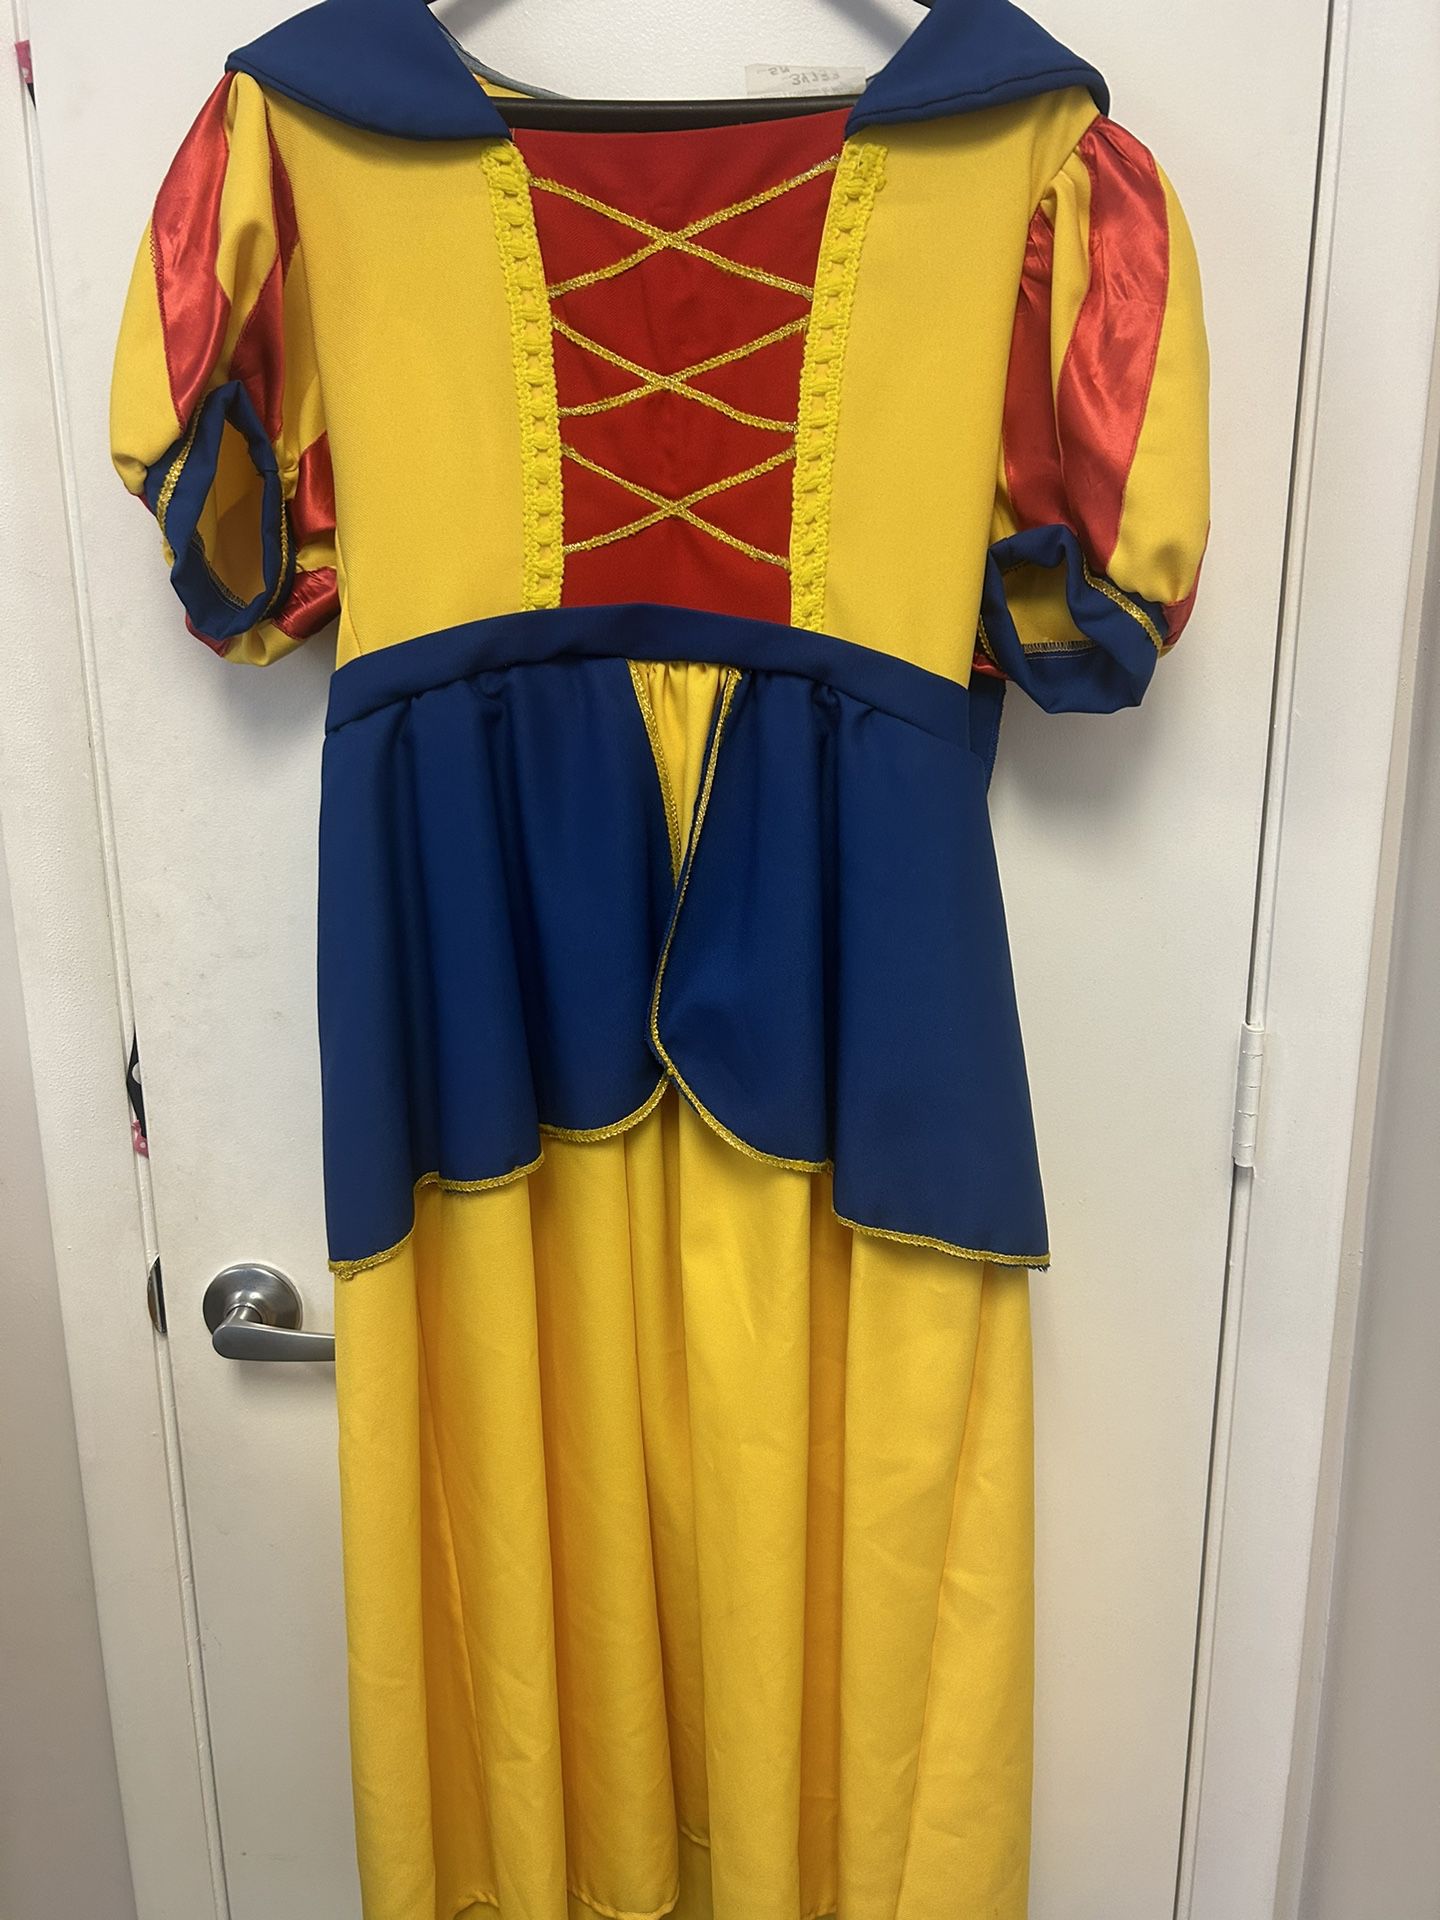 Handmade Snow White Costume Dress